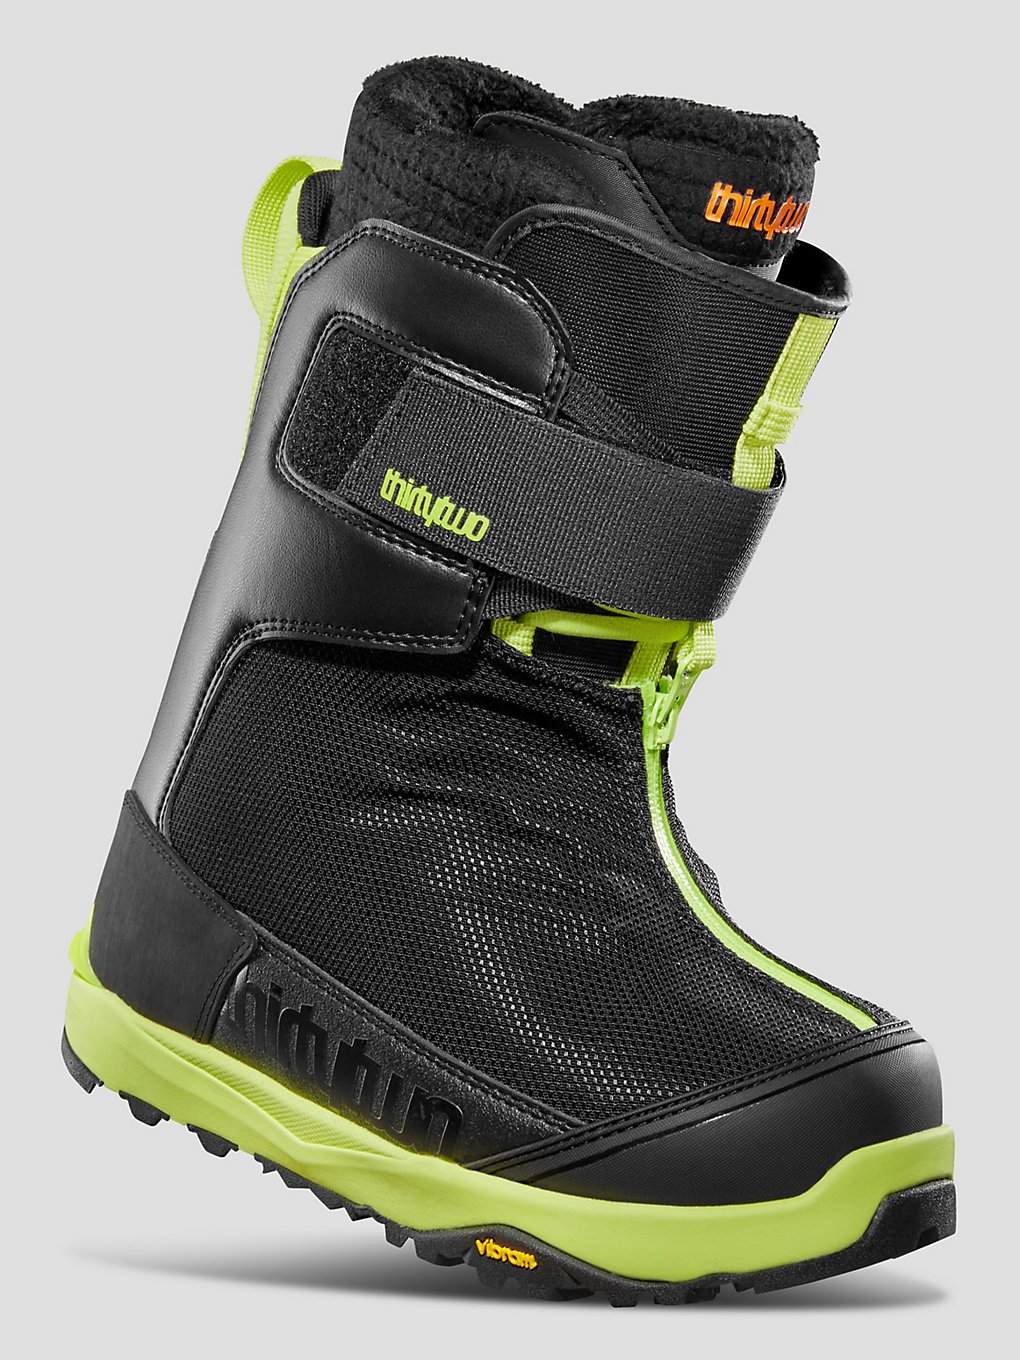 ThirtyTwo TM 2 Hight Snowboard-Boots lime kaufen